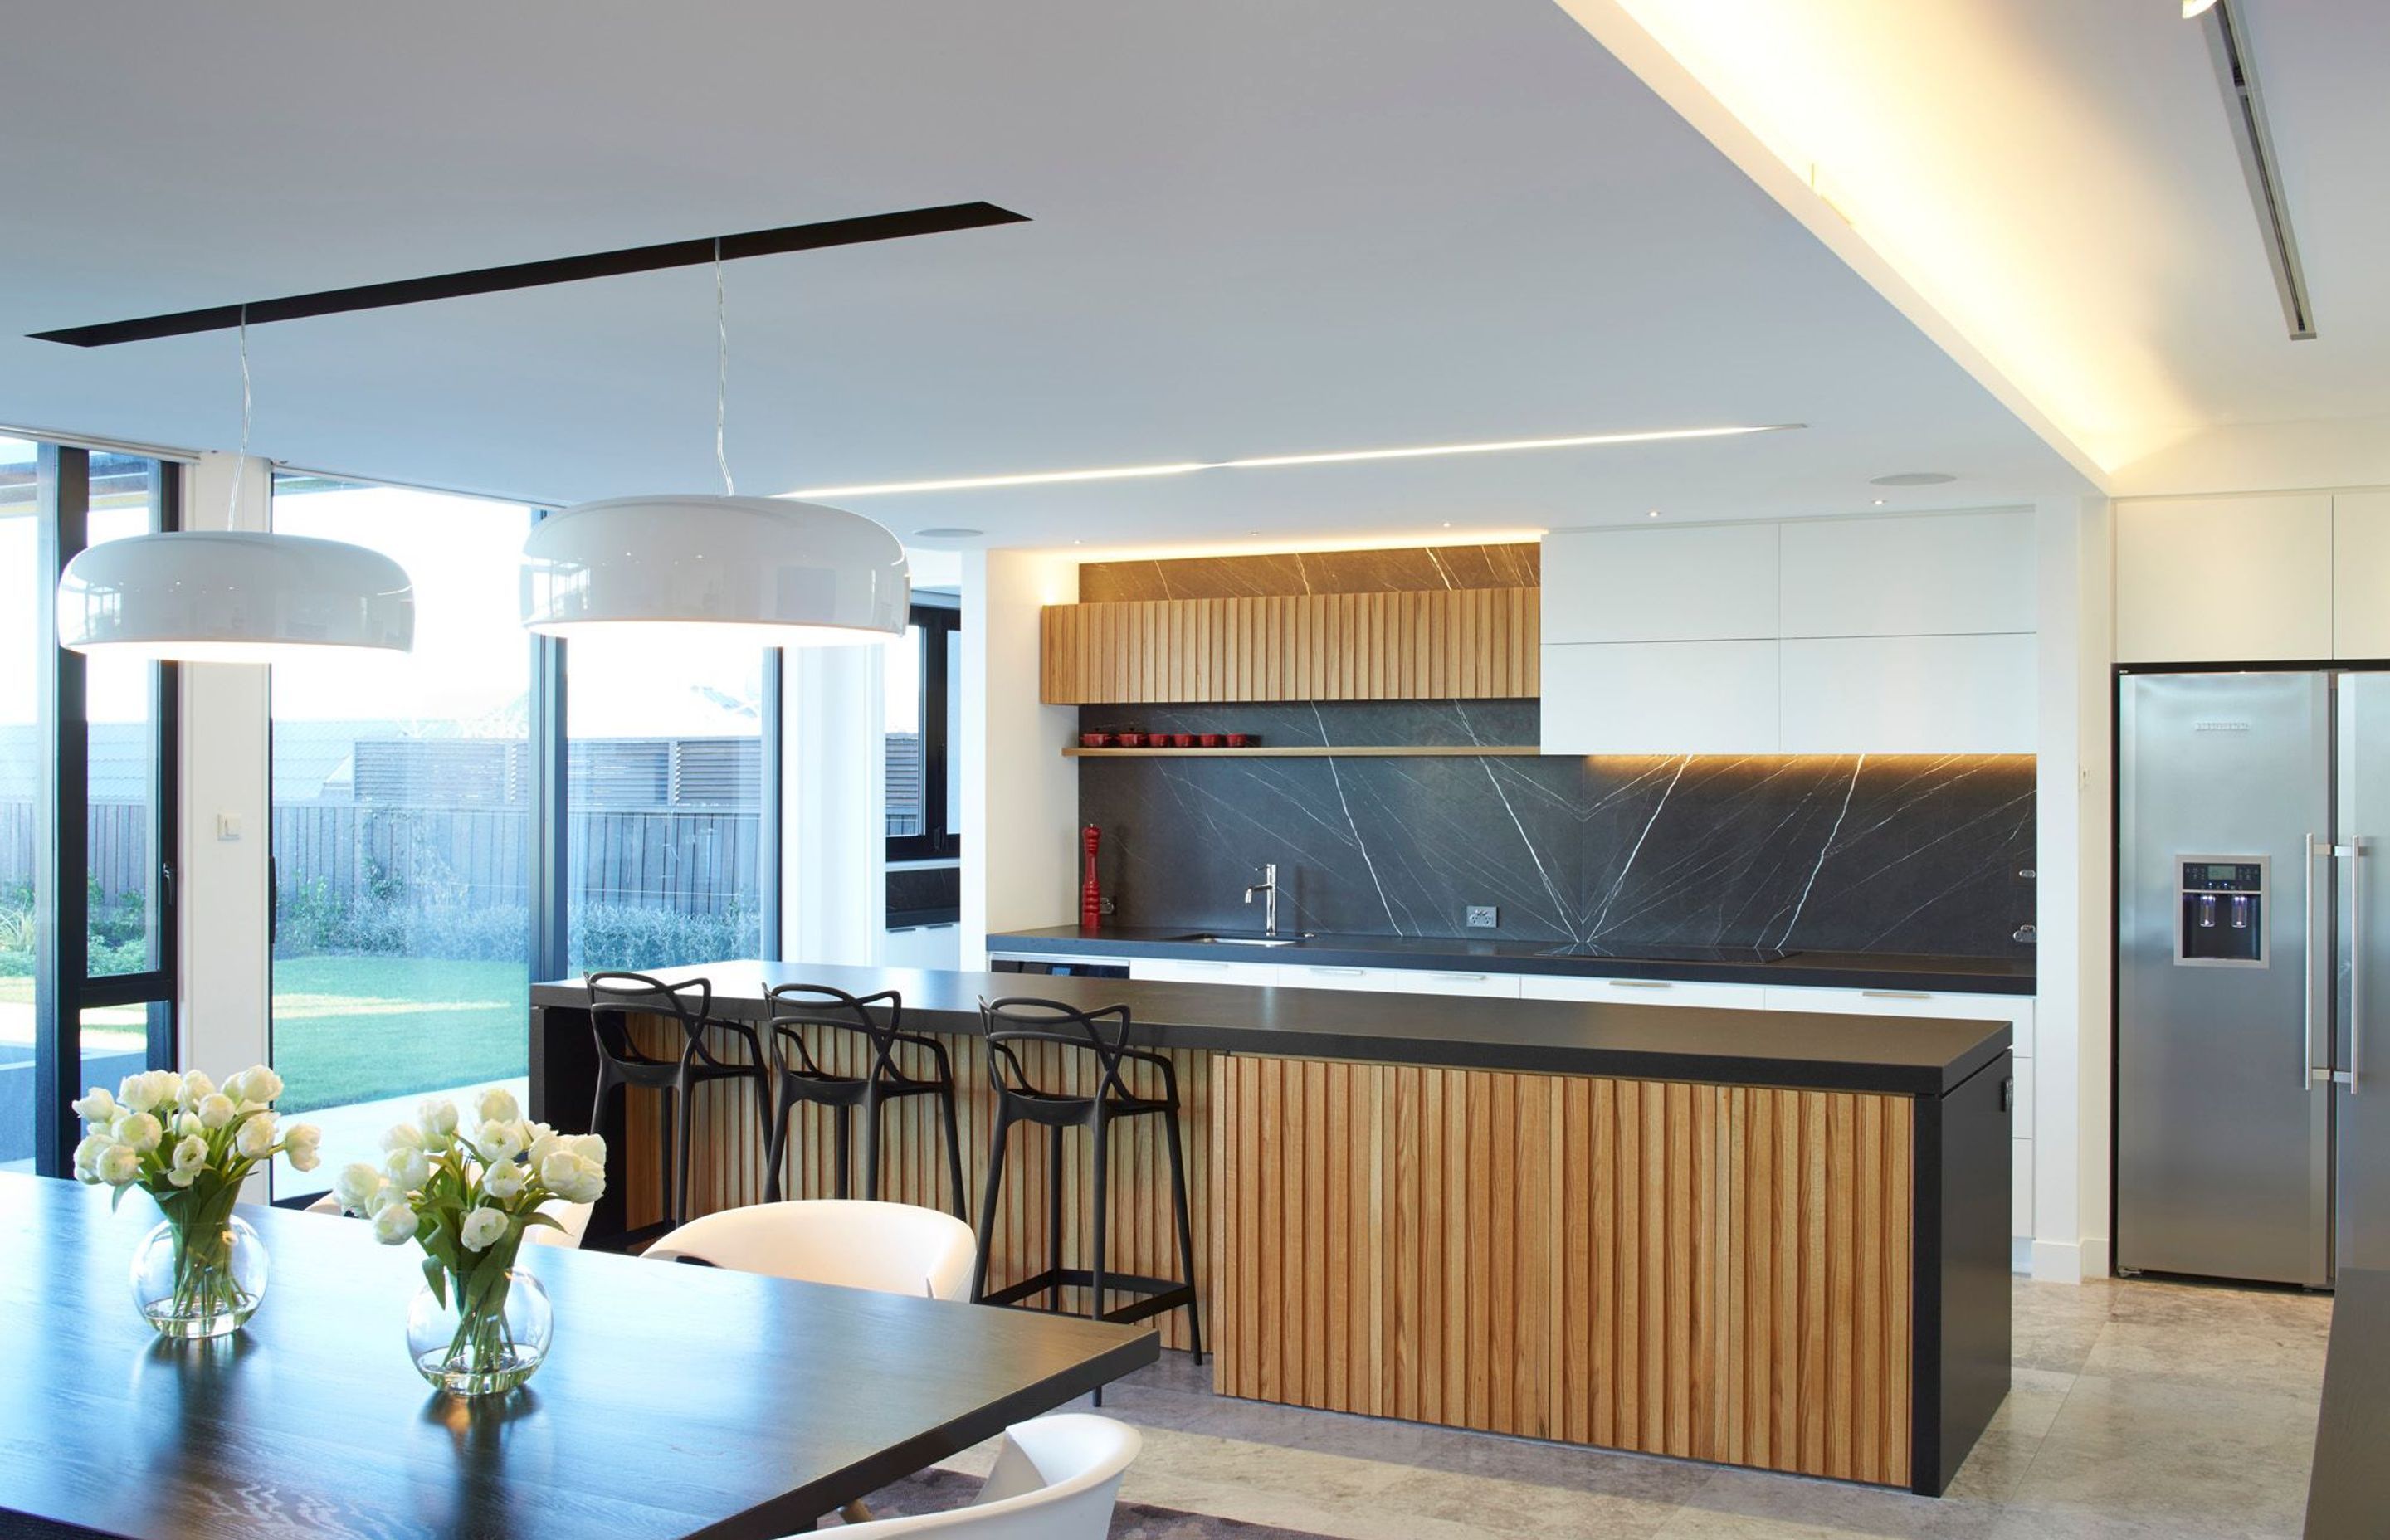 Kitchen and scullery designed by Ingrid Geldof Design